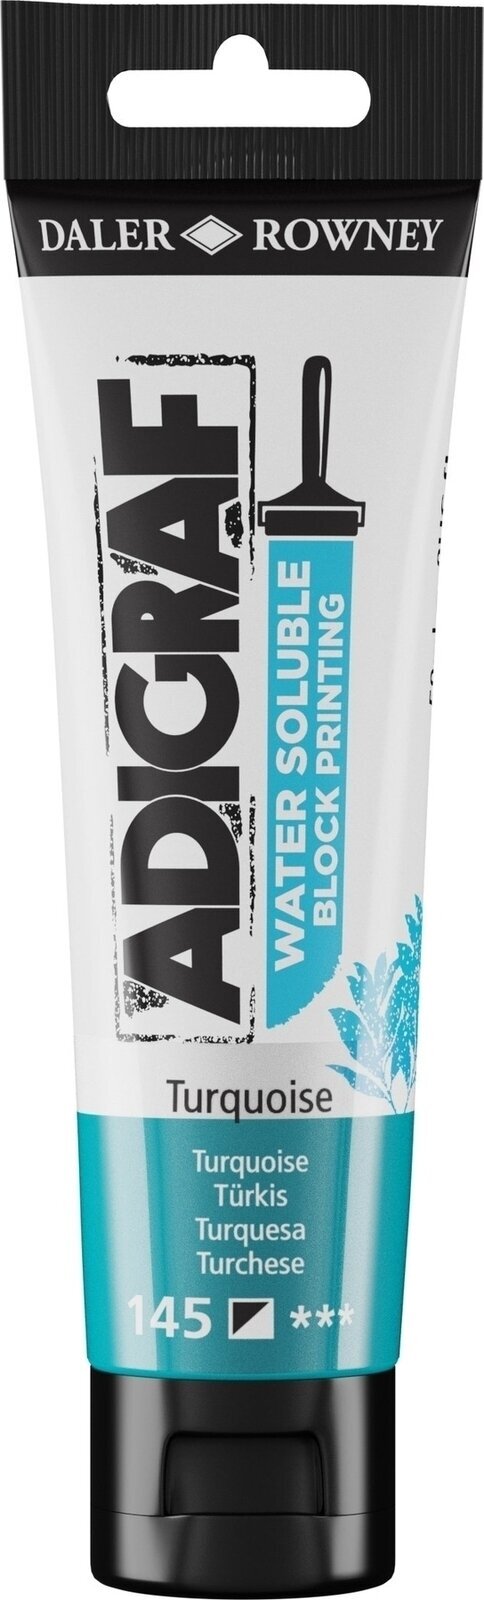 Tinta para linogravura Daler Rowney Adigraf Block Printing Water Soluble Colour Tinta para linogravura Turquoise 59 ml